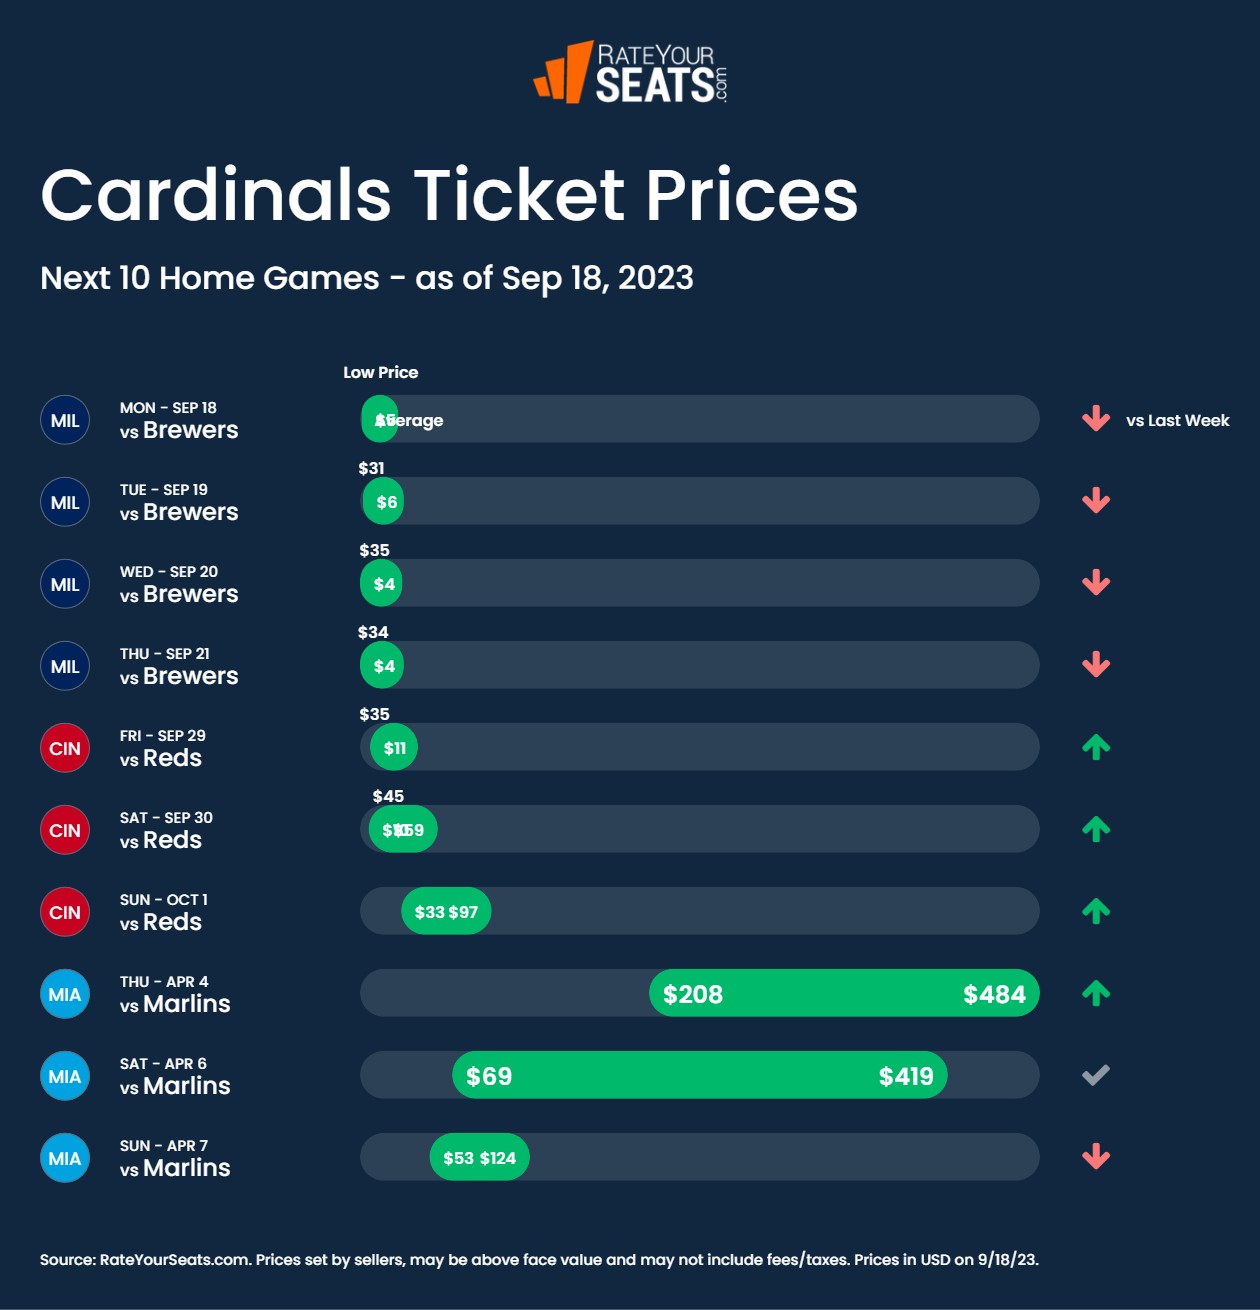 Cardinals tickets pricing week of September 18 2023